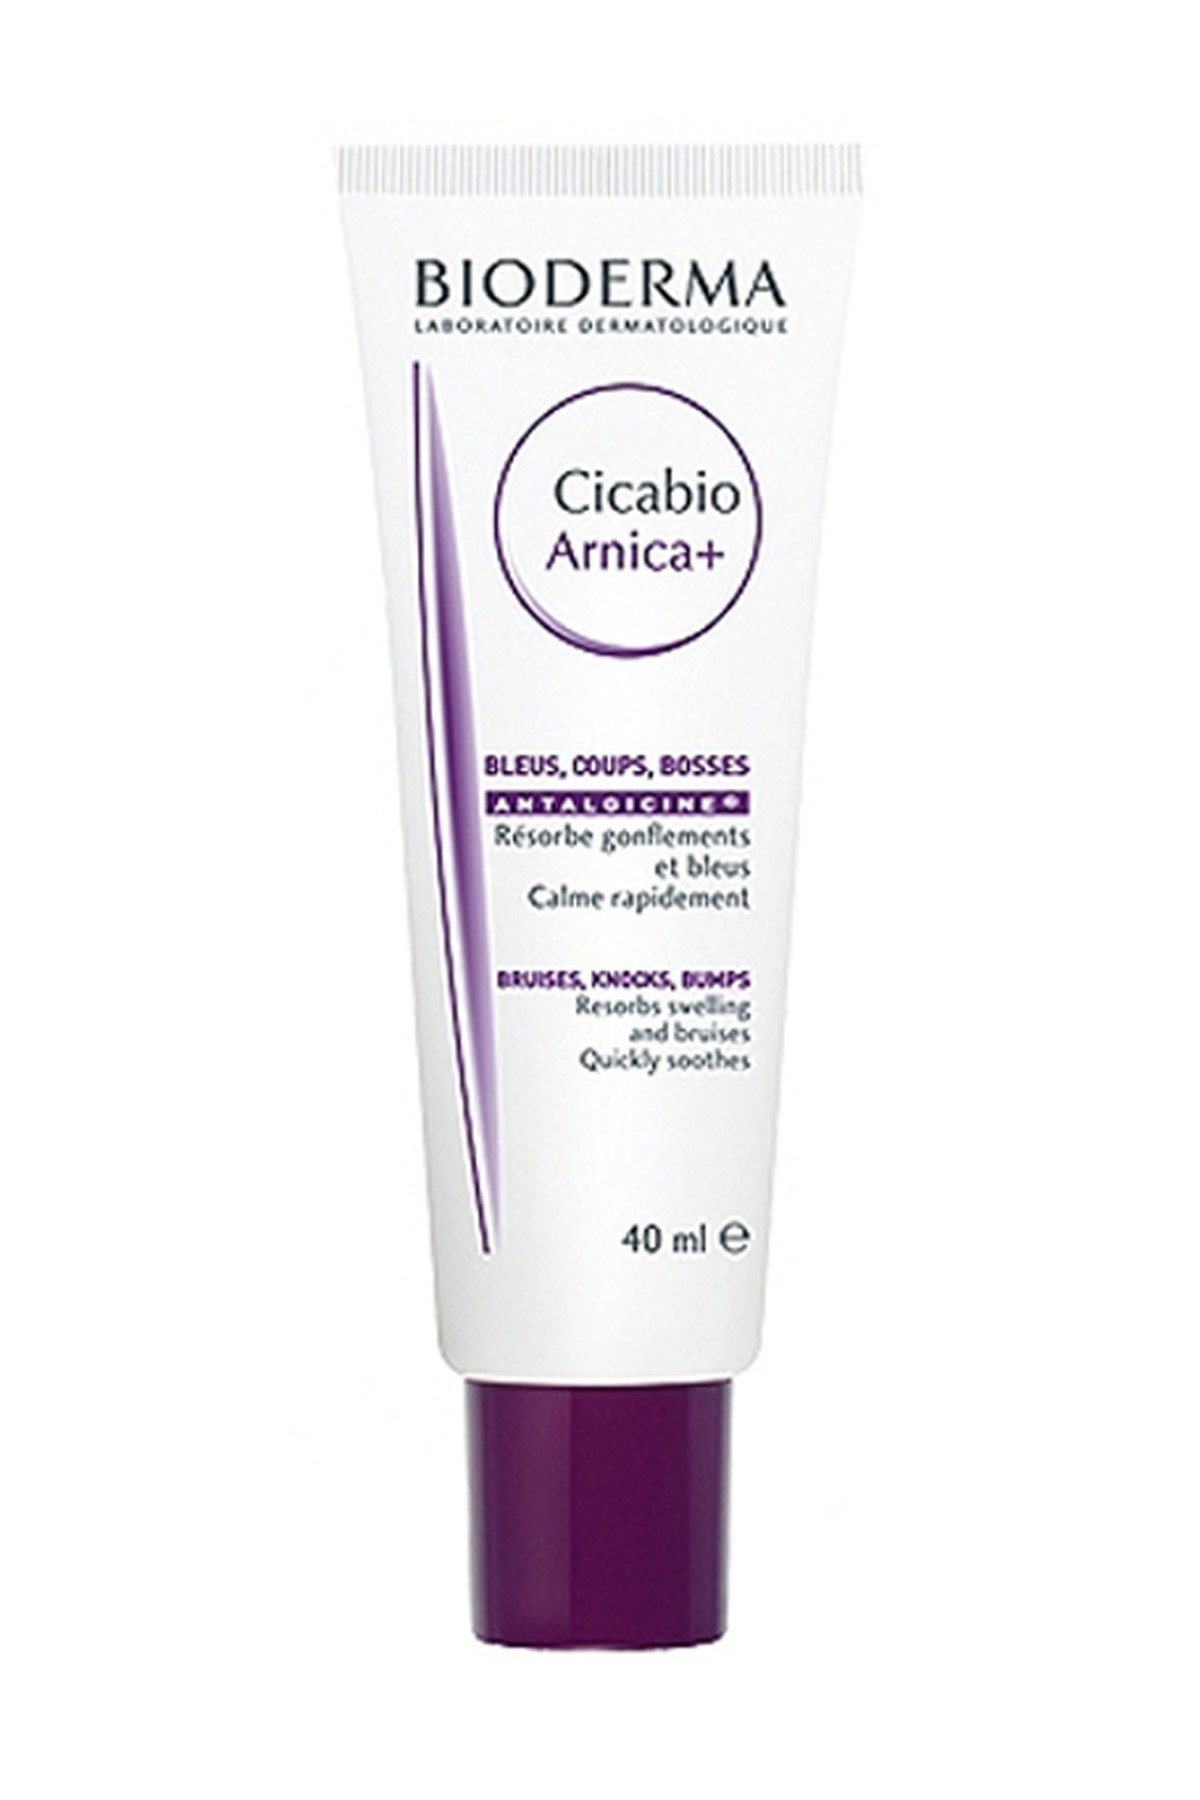 Bioderma Цикабио Арника+ Крем для лица и тела 40 мл матирующие салфетки для лица matte blotting papers lilac